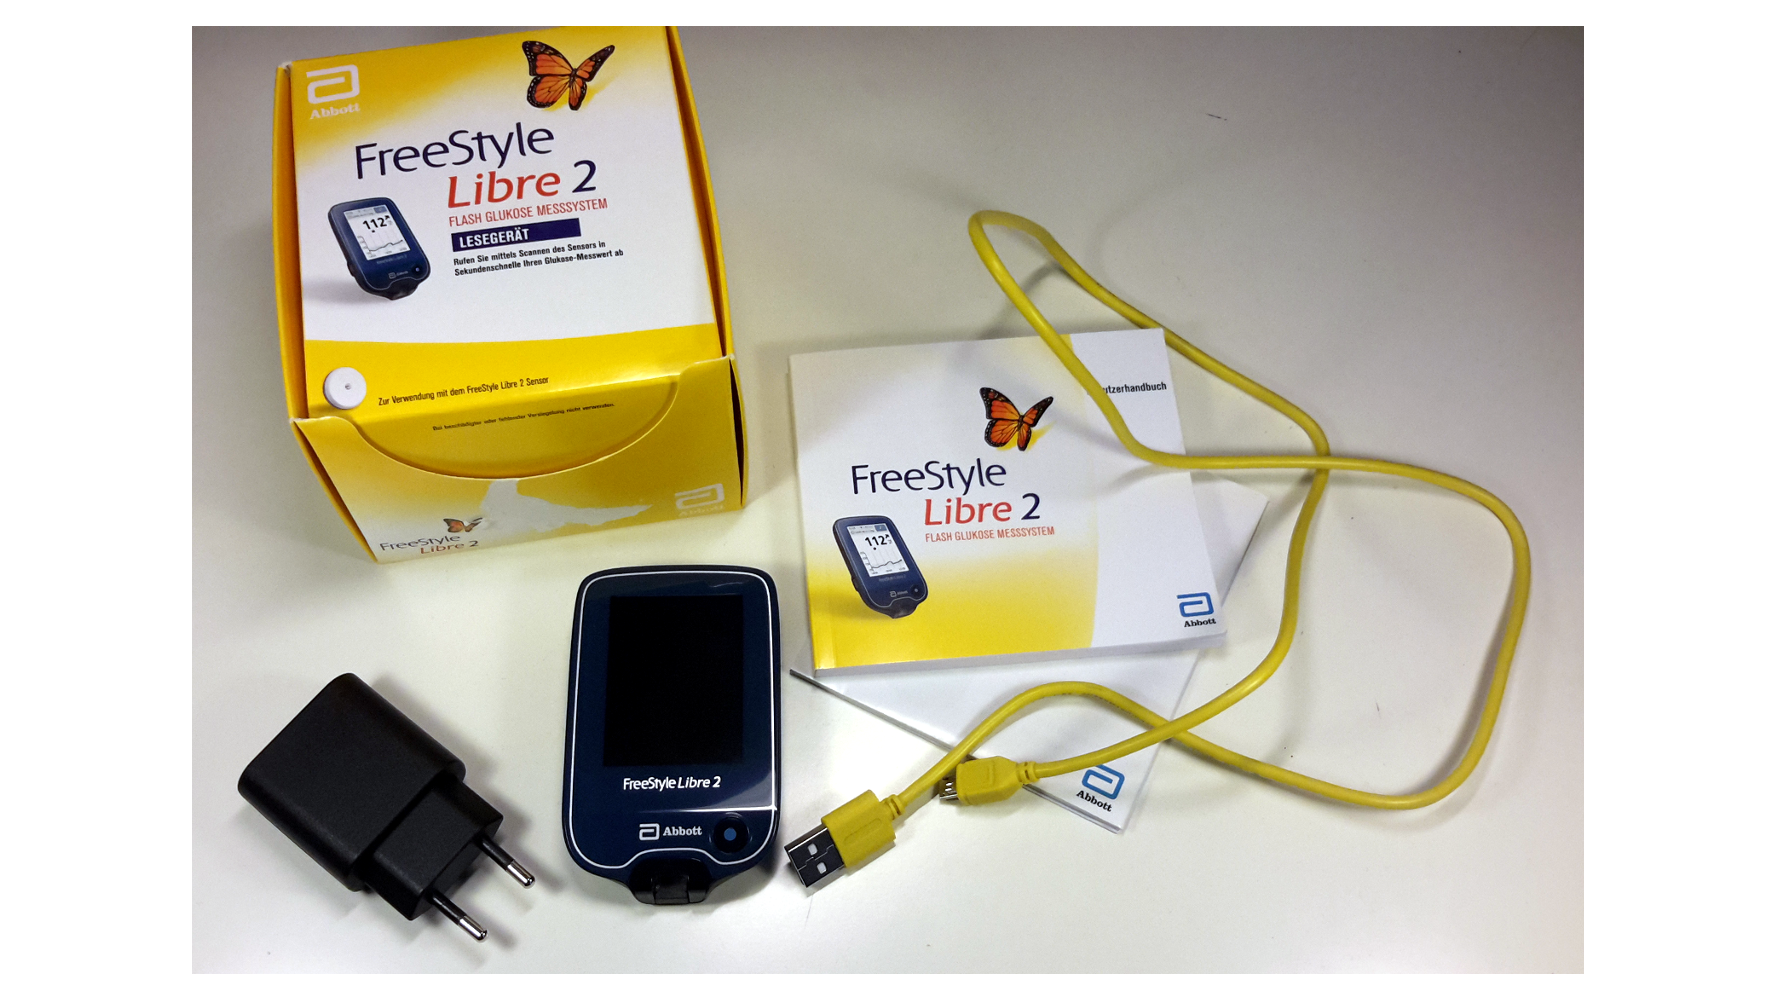 freestyle libre flash glucose monitoring system youtube